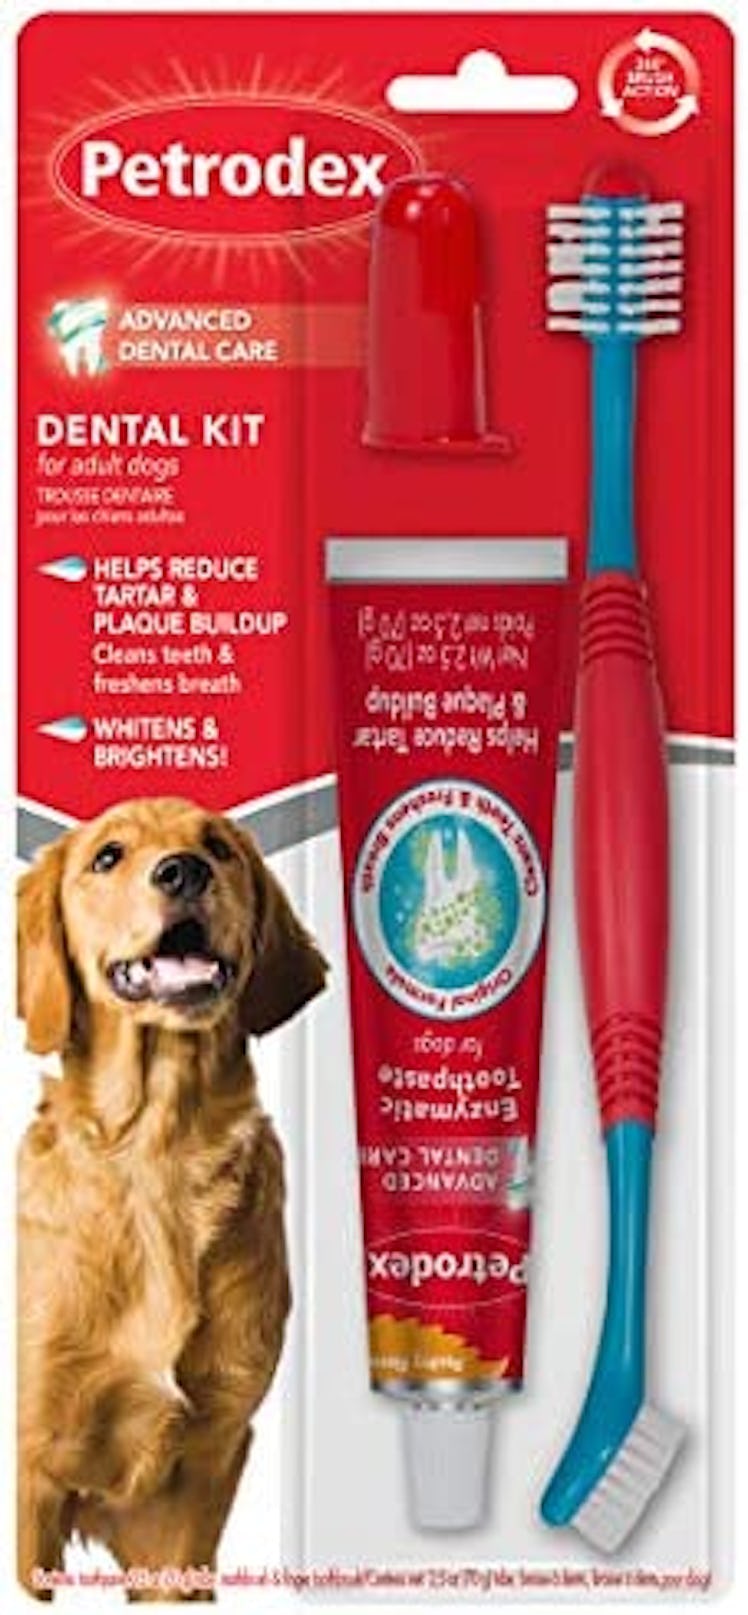 Petrodex Dental Care Kit for Dogs